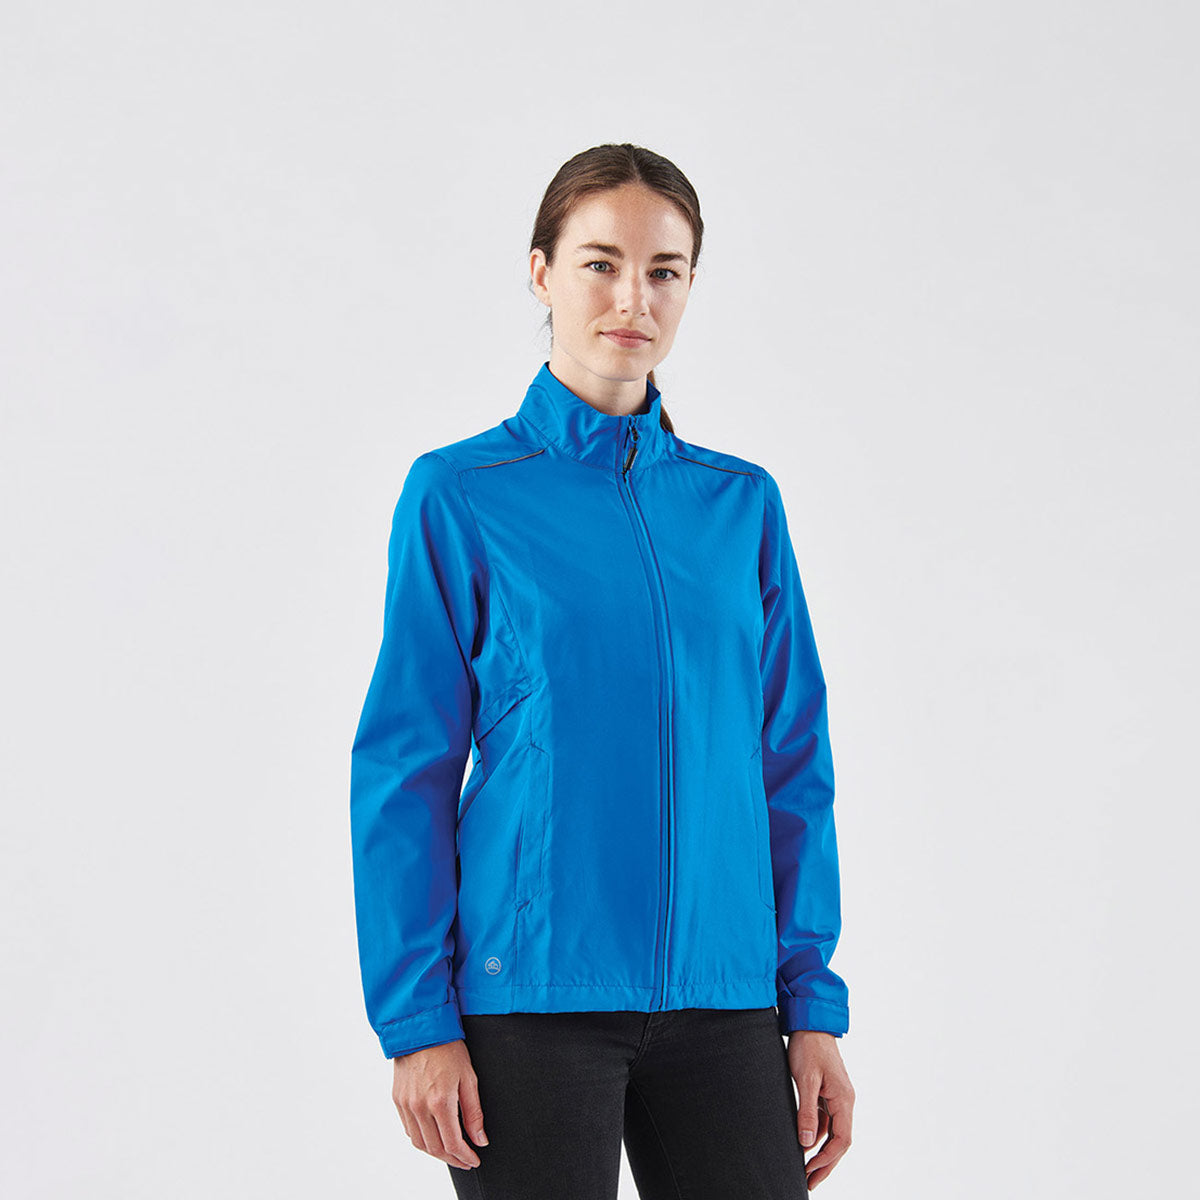 Women's Mistral Fleece Jacket - TMX-2W